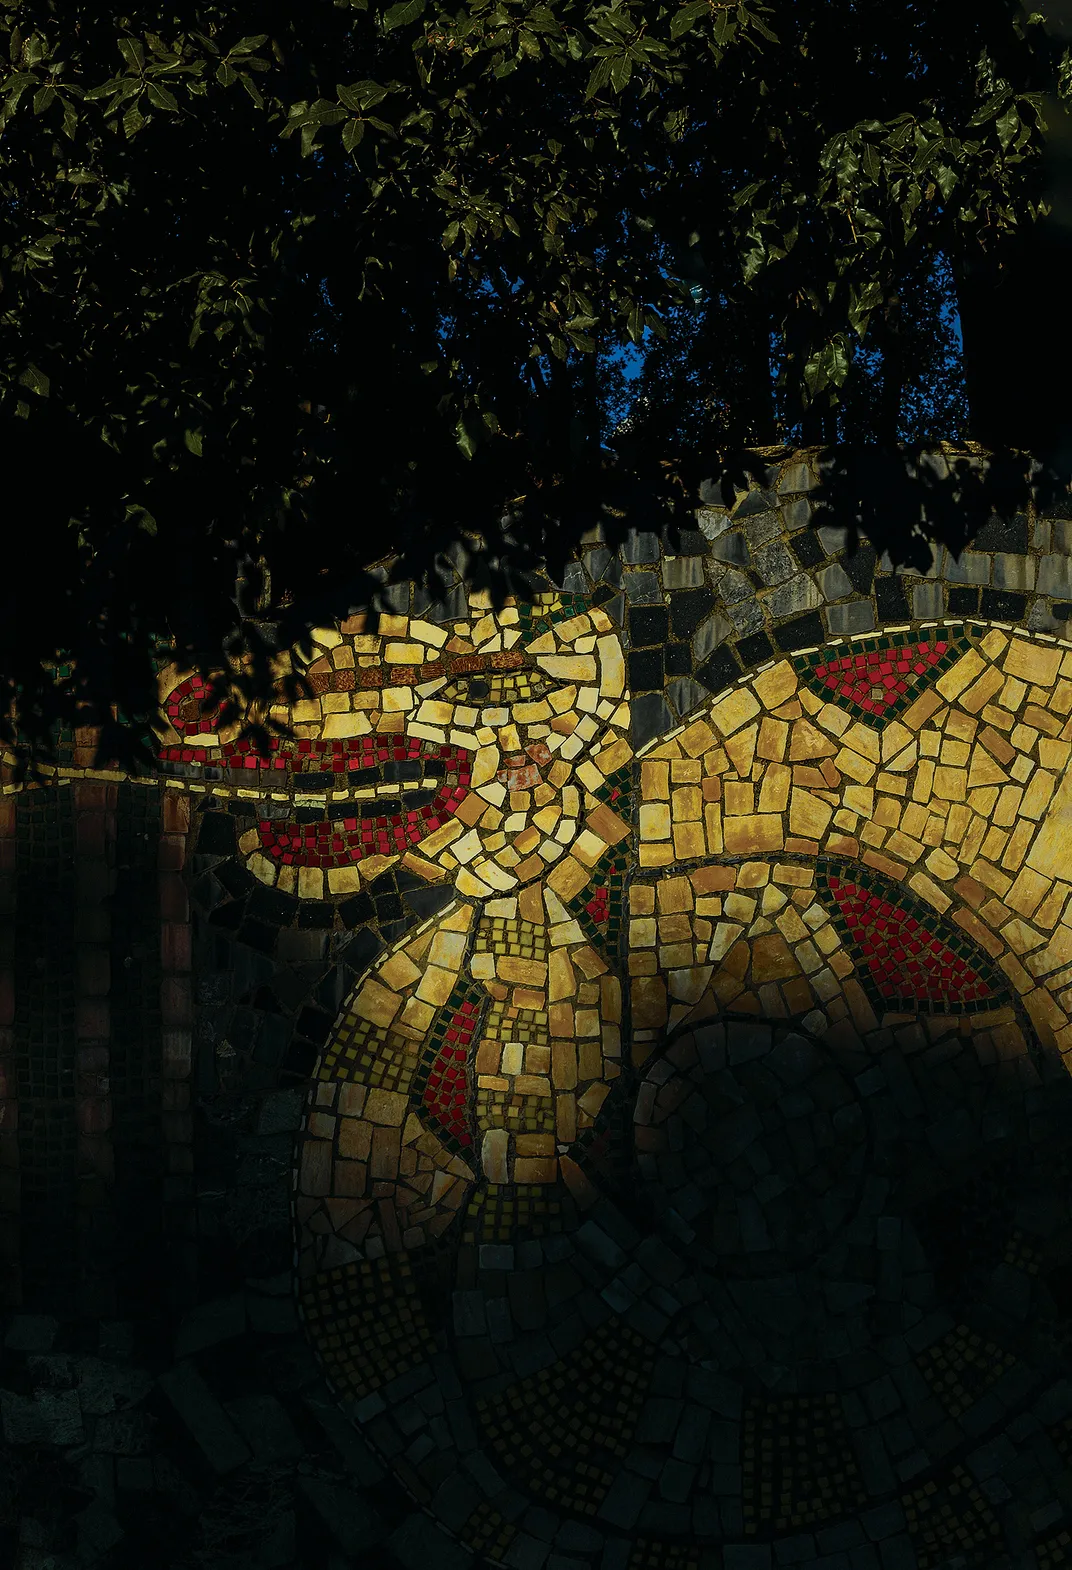 A mosaic by Venturino Venturi